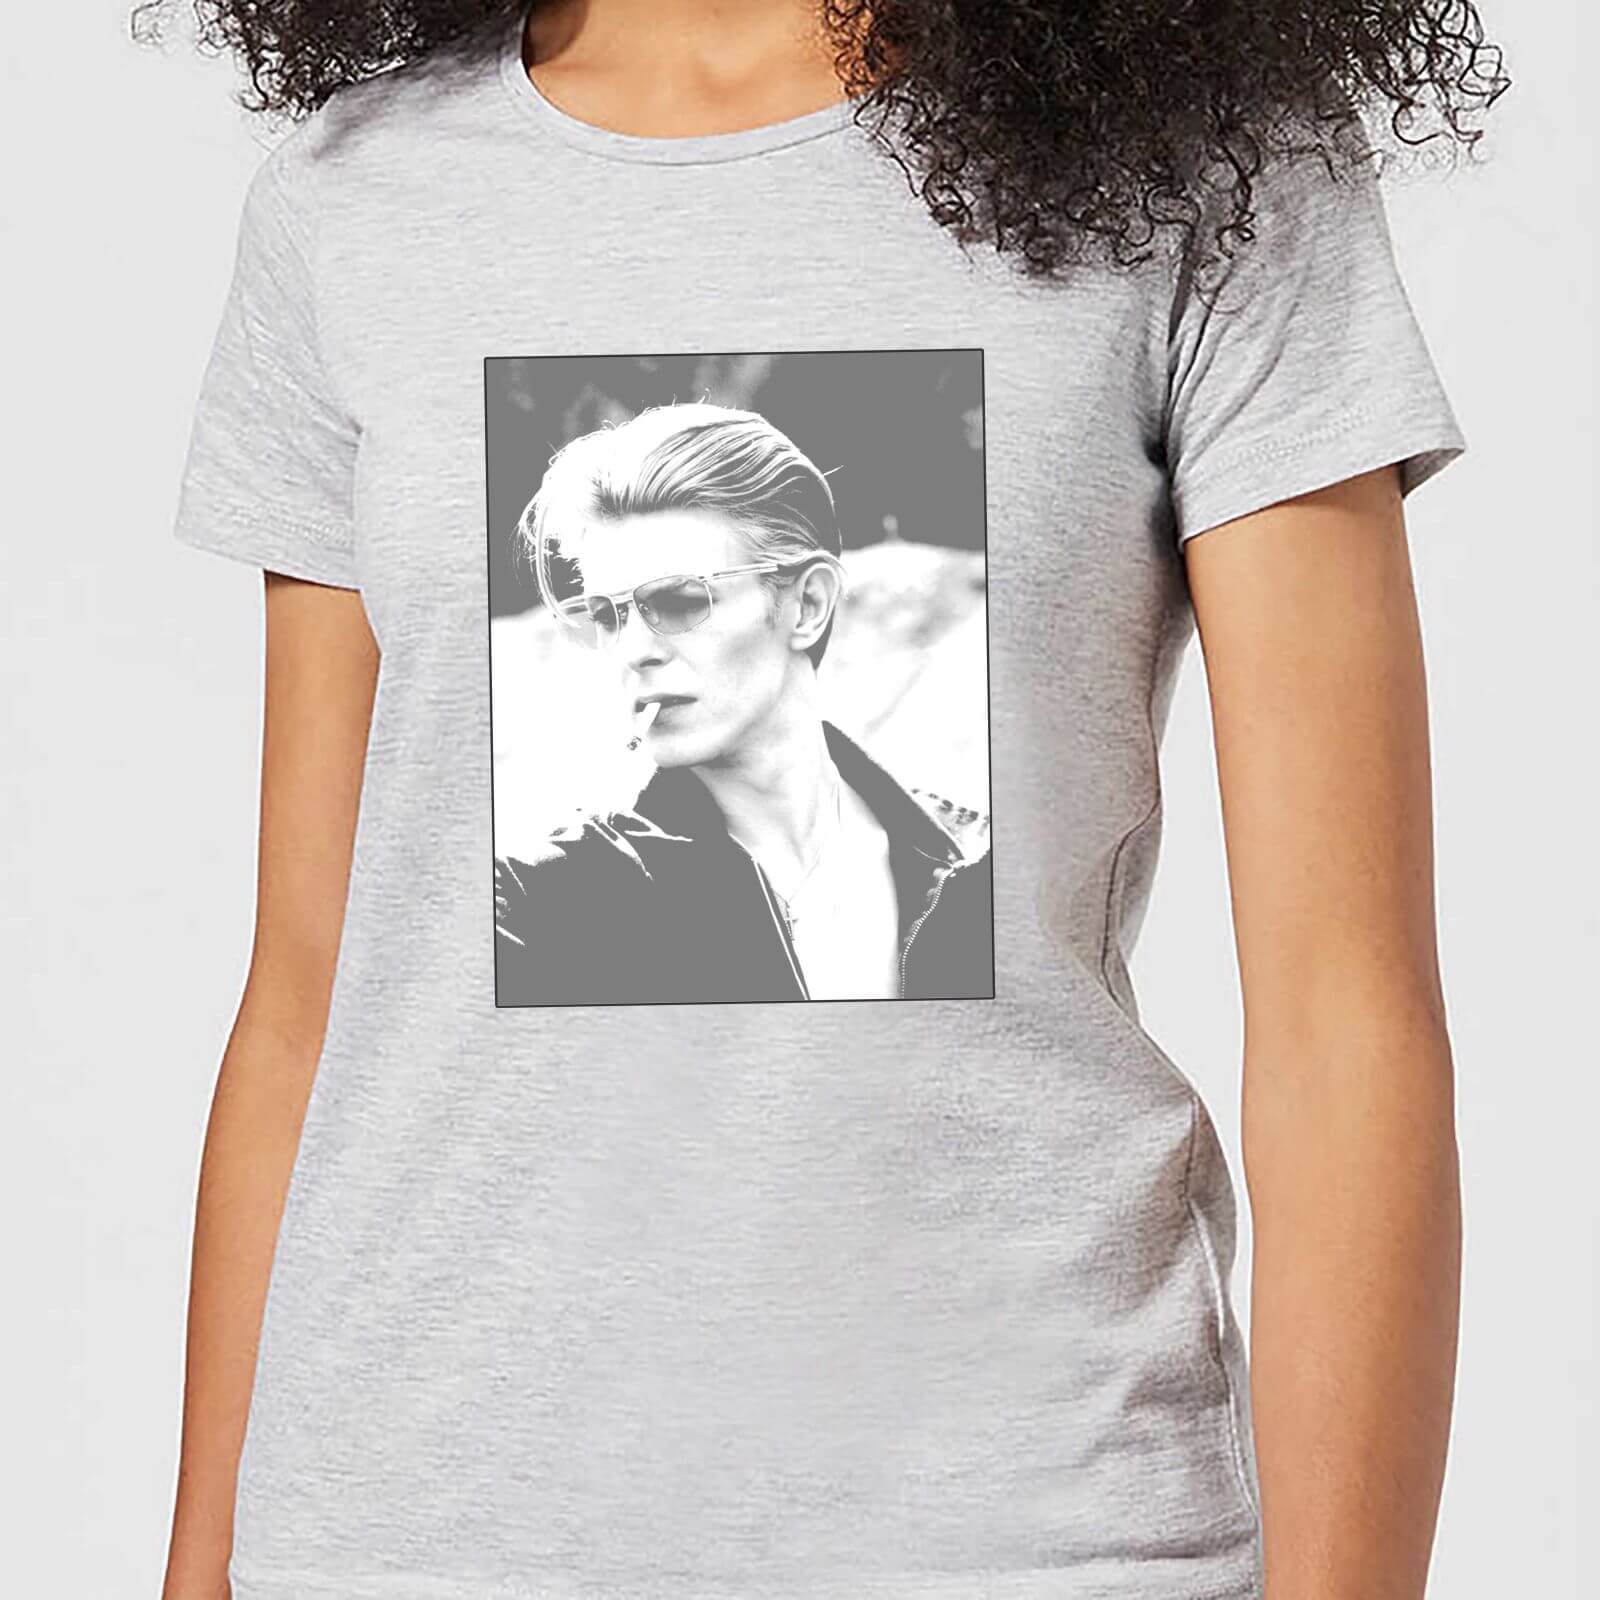 David Bowie Wild Profile Framed Women's T-Shirt - Grey - S - Grey